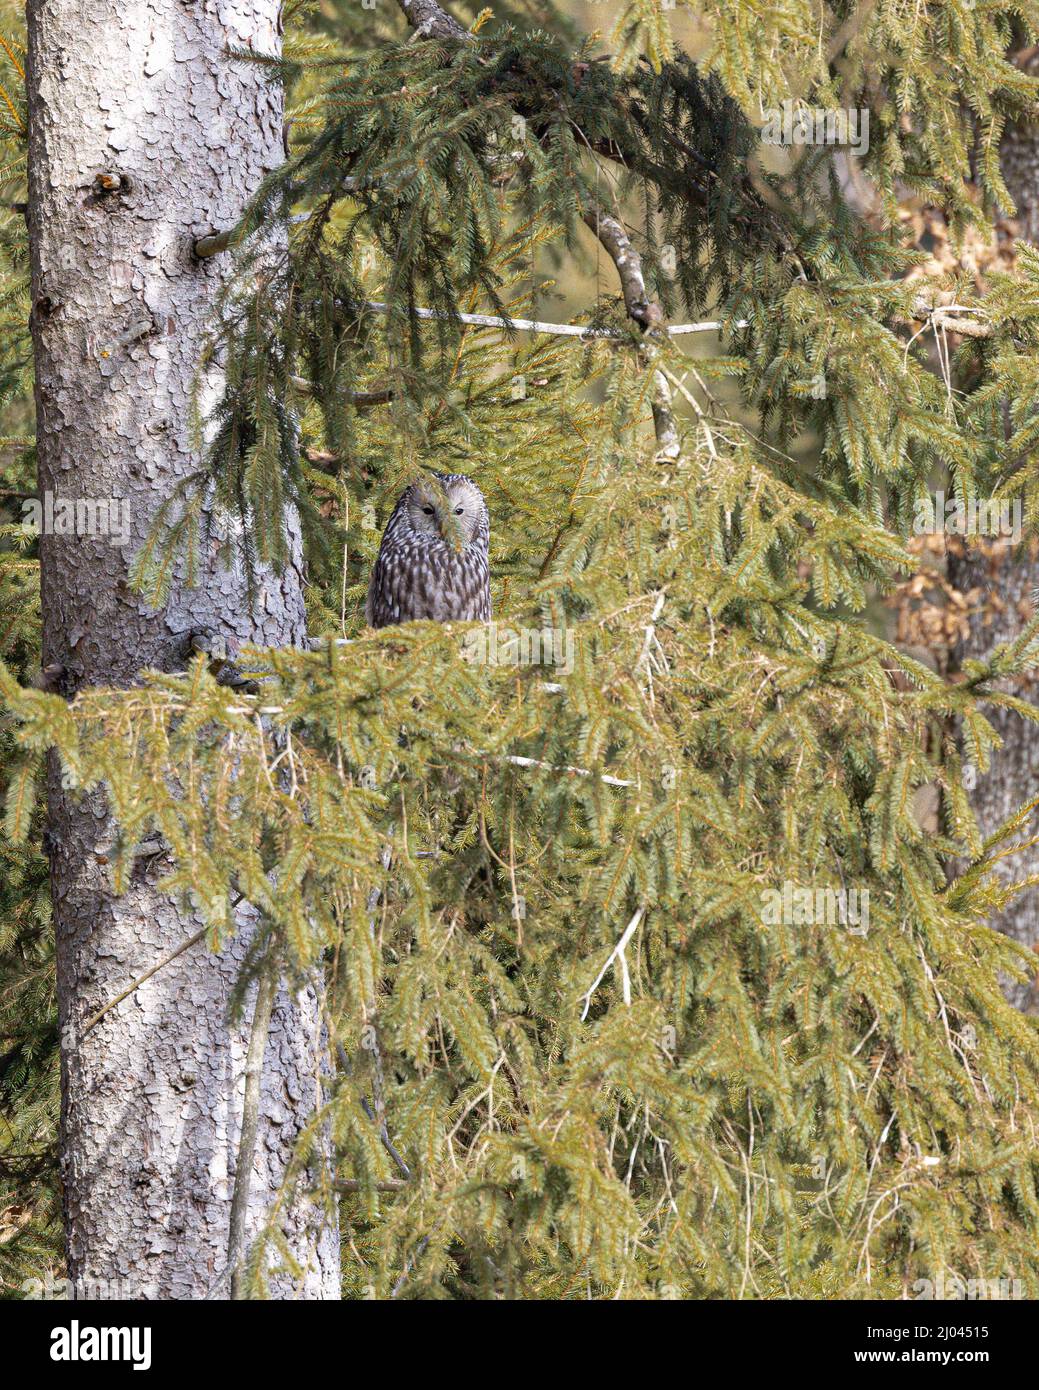 rare wildlife birds: single Ural owl ( Strix uralensis ) hidden between green branches Stock Photo